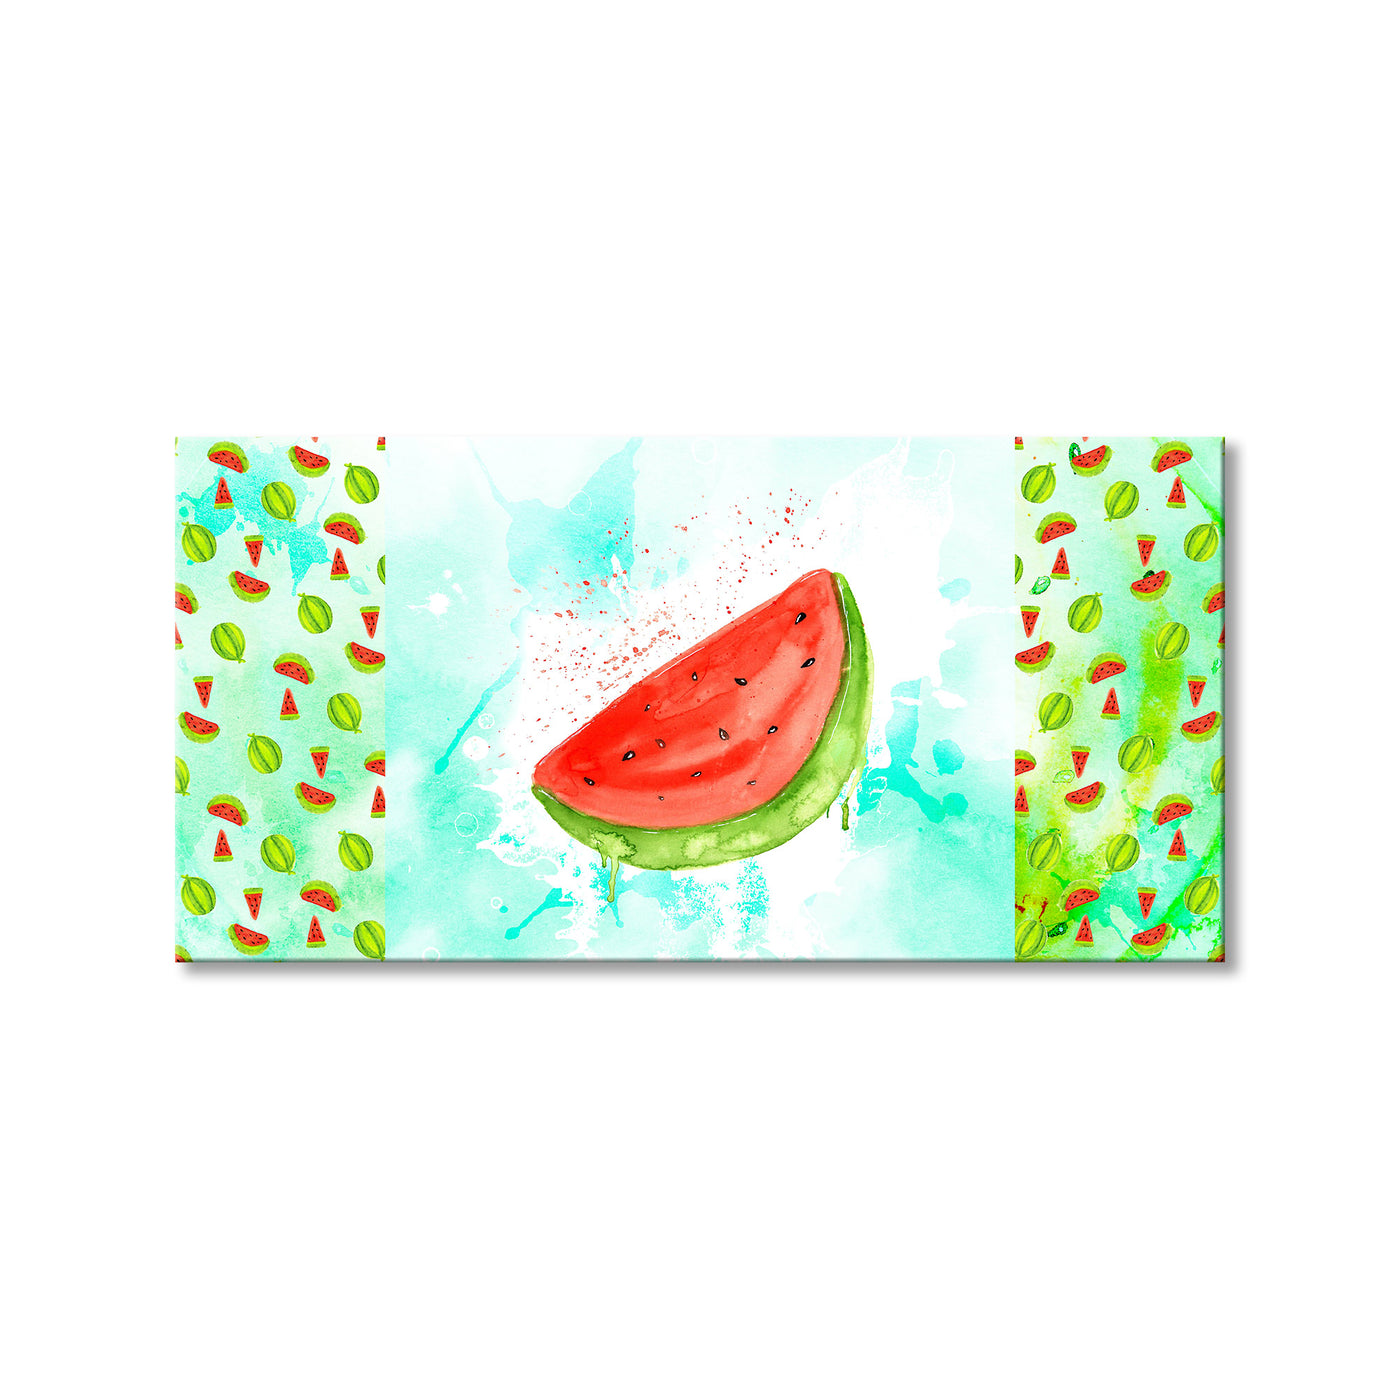 Watermelon Splash